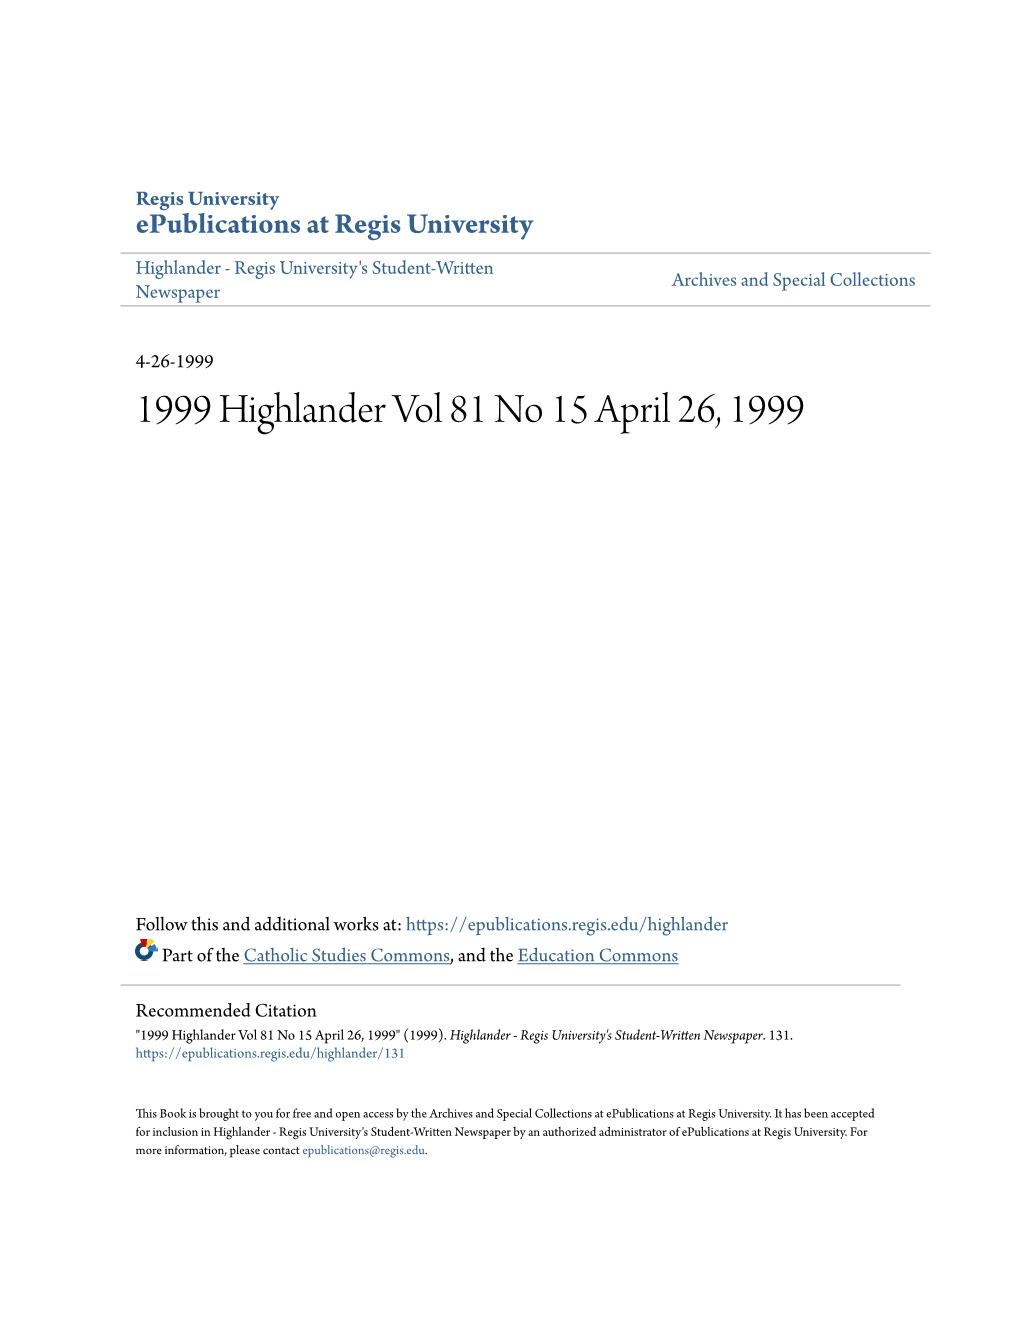 1999 Highlander Vol 81 No 15 April 26, 1999